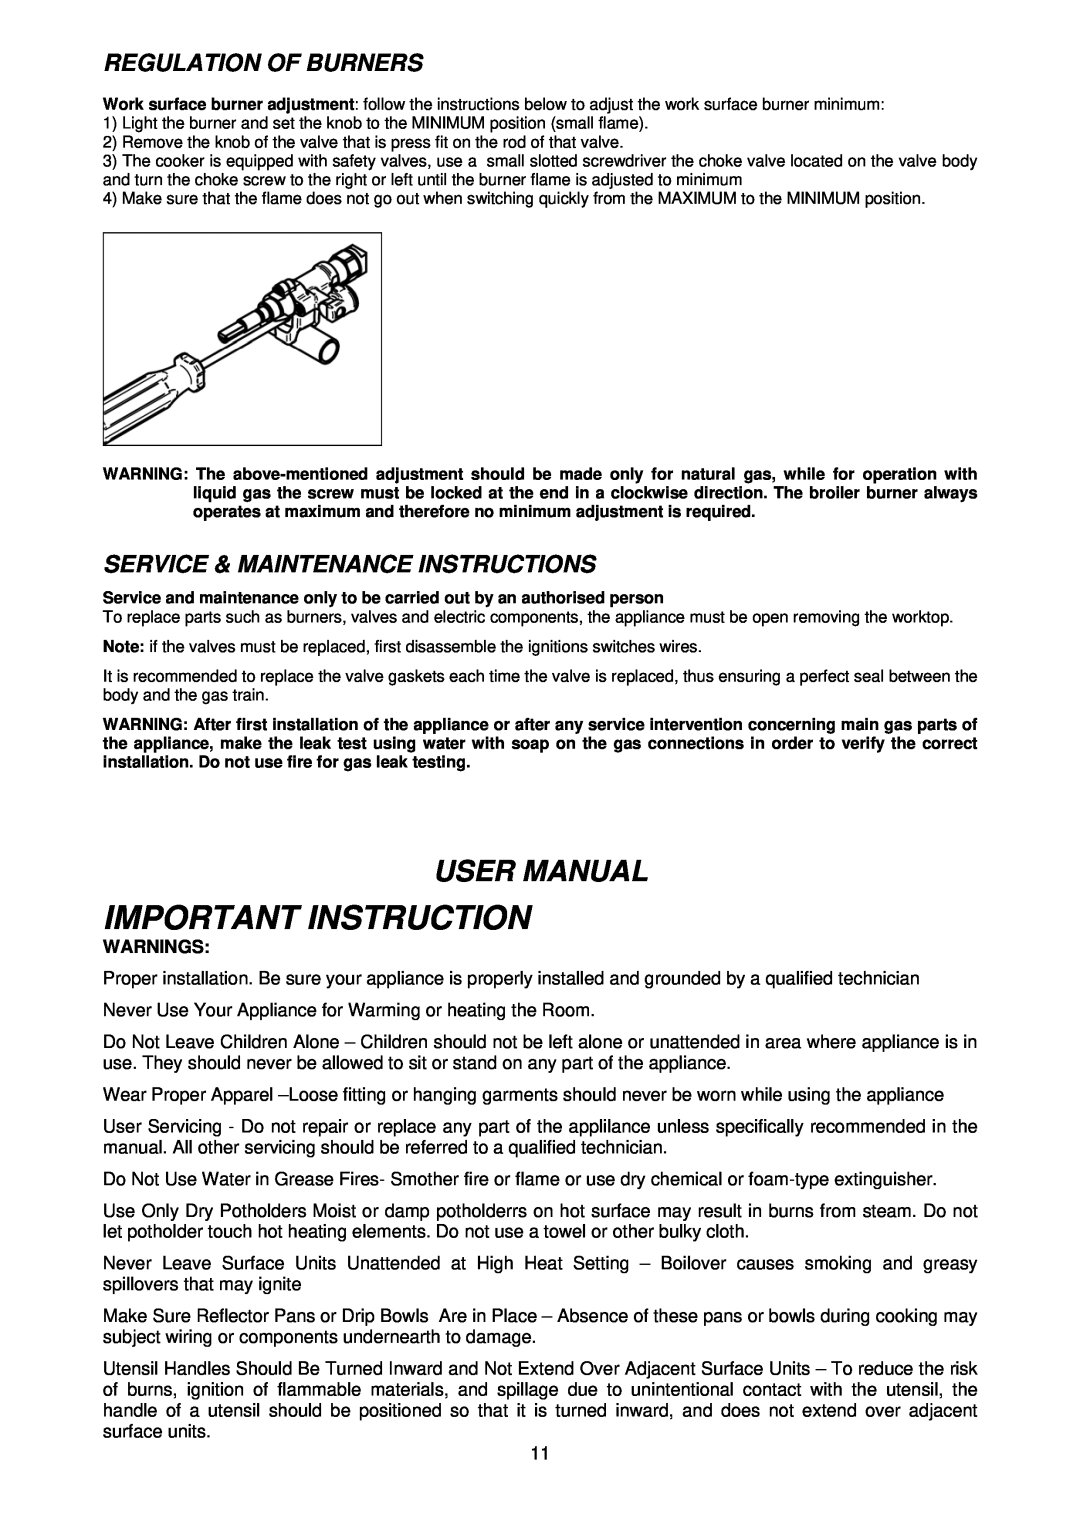 Bertazzoni CTYK..U7X(2,5)A dimensions Important Instruction, Regulation Of Burners, Service & Maintenance Instructions 